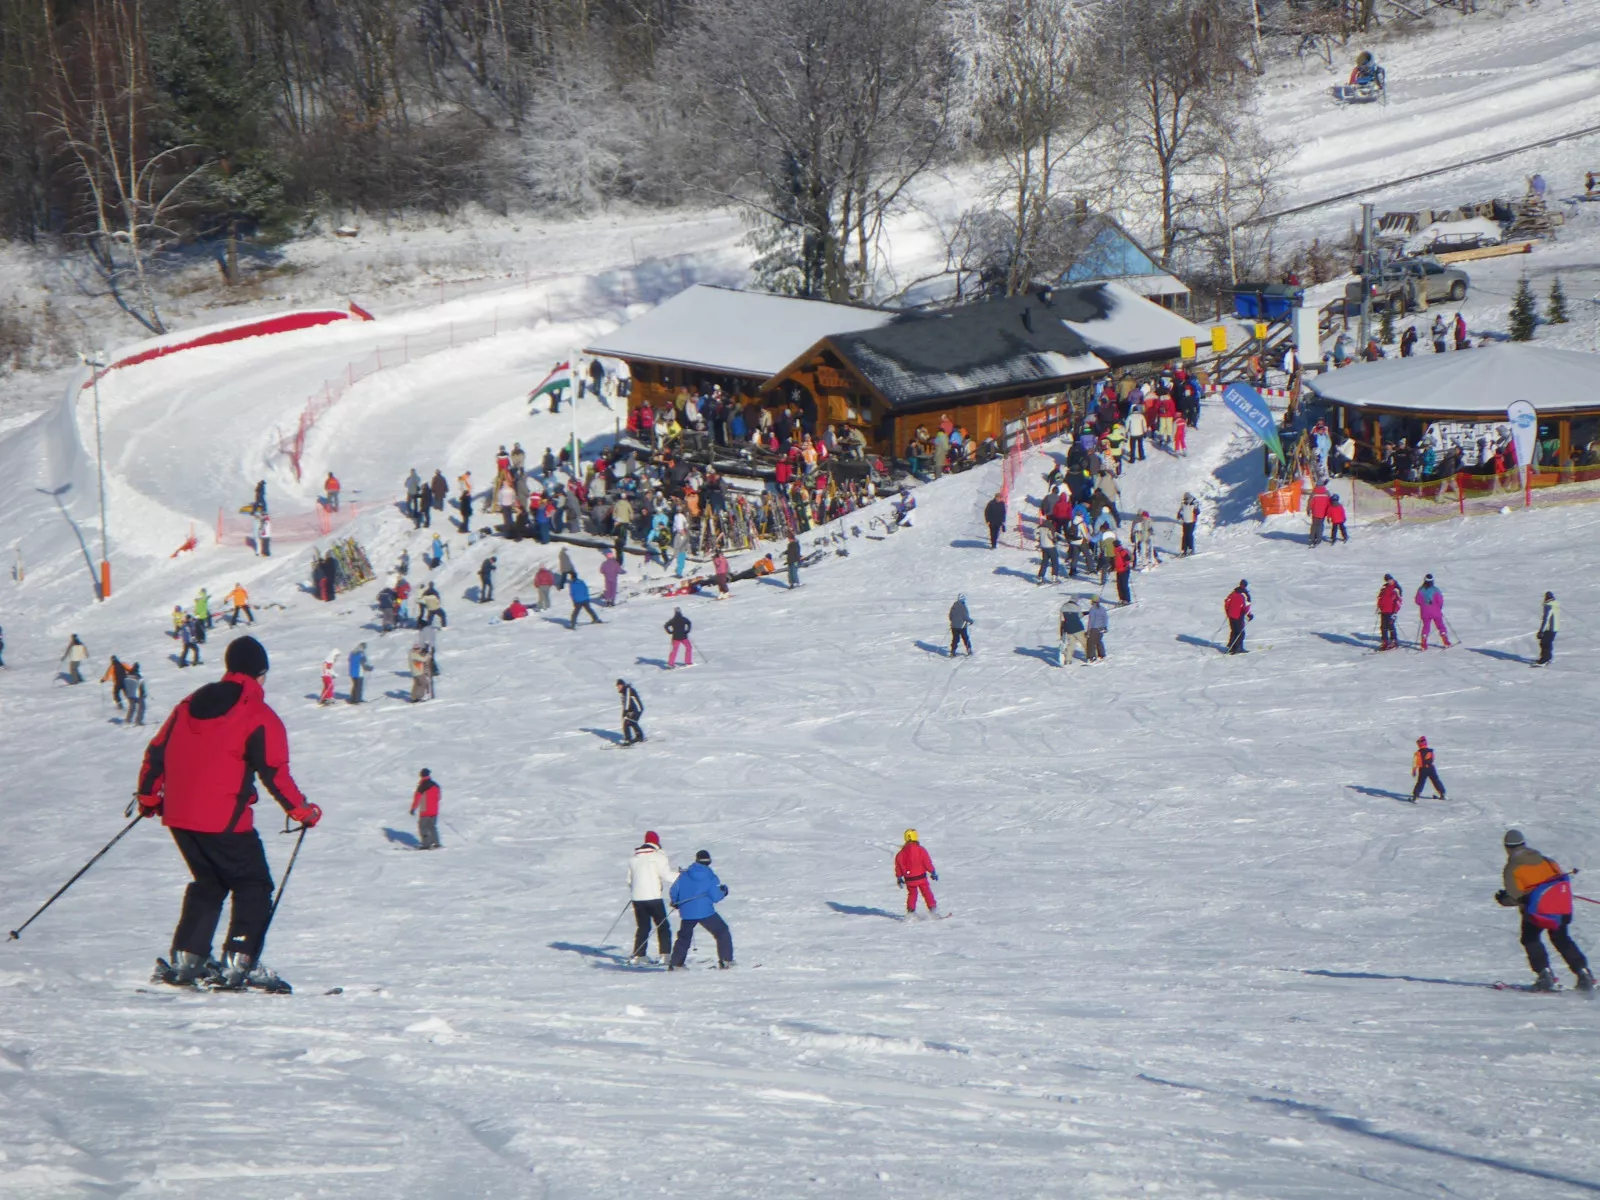 Sipark Matraszentistvan in Hungary, Europe | Snowboarding,Skiing,Snowmobiling - Rated 4.9